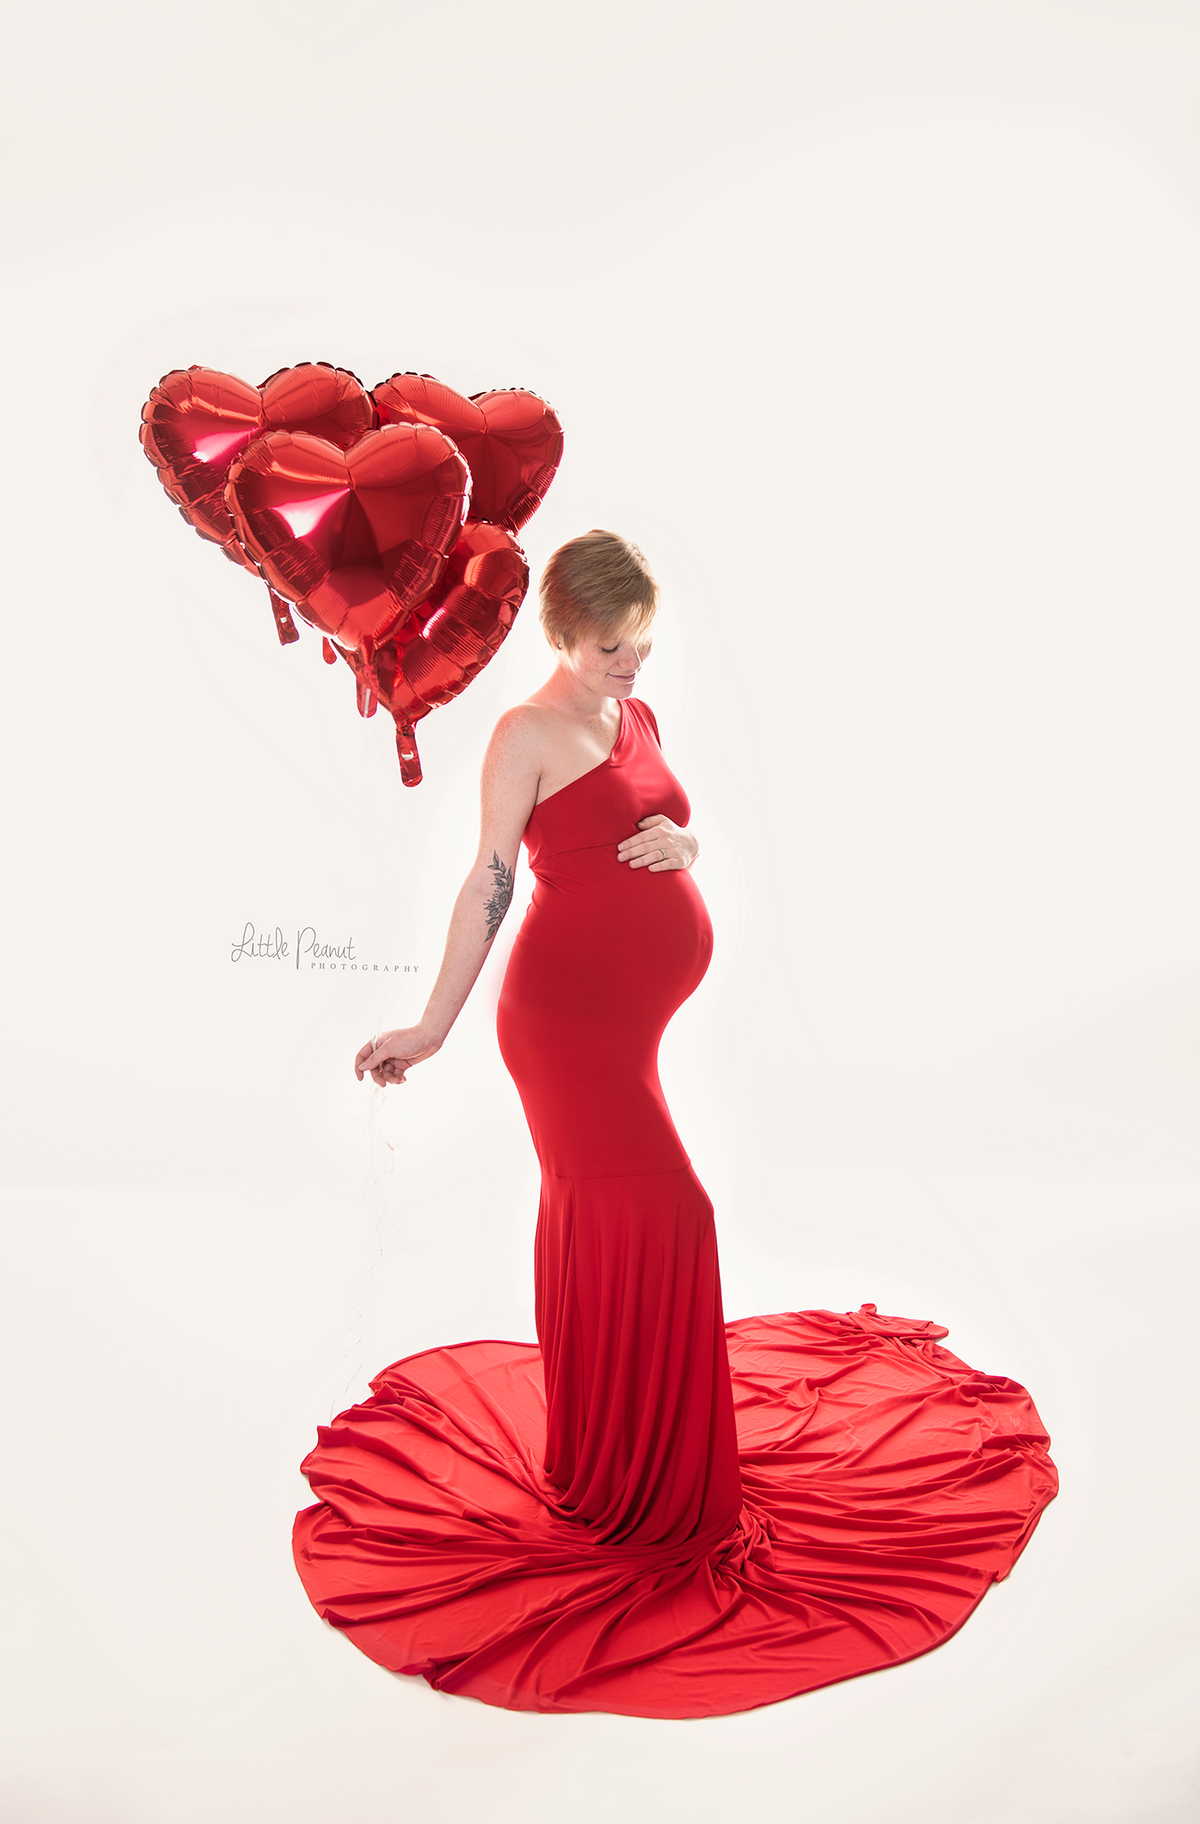 w2021-LittlePeanutPhotography-Maternity2567